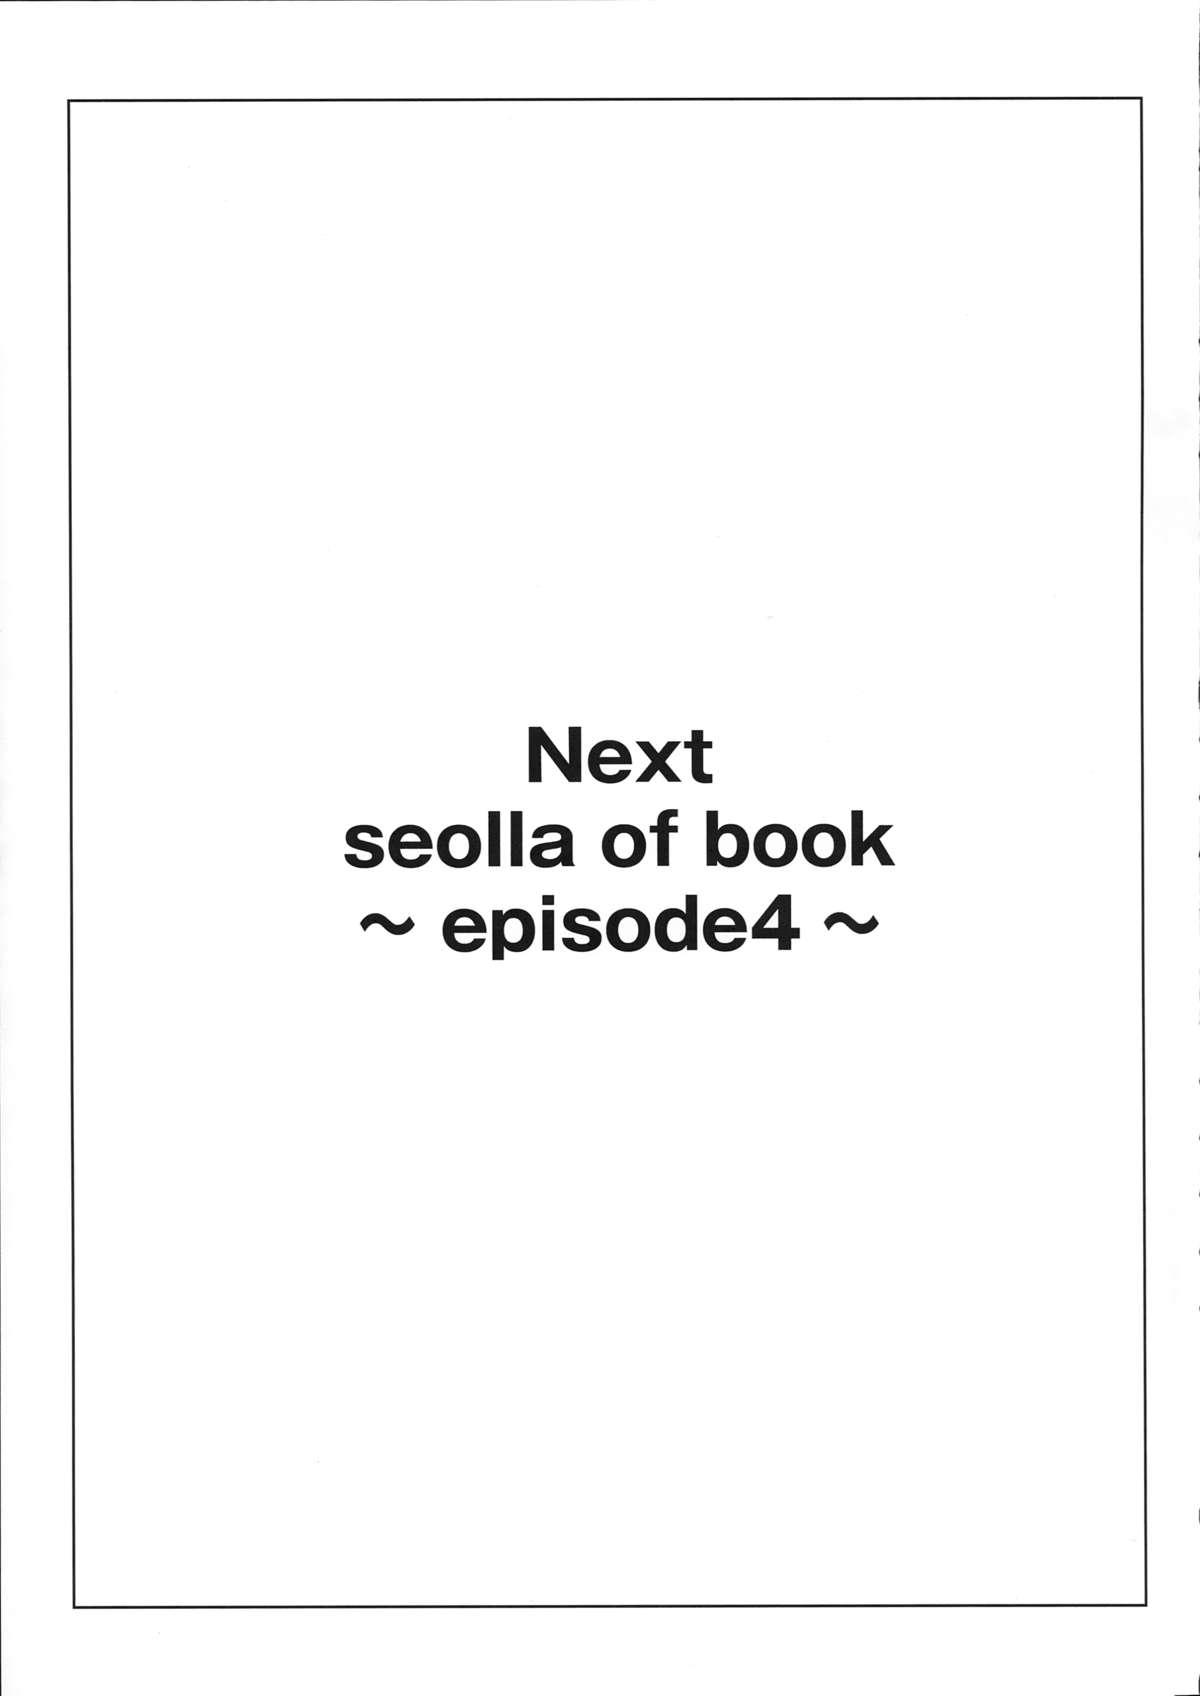 Seolla of book 15